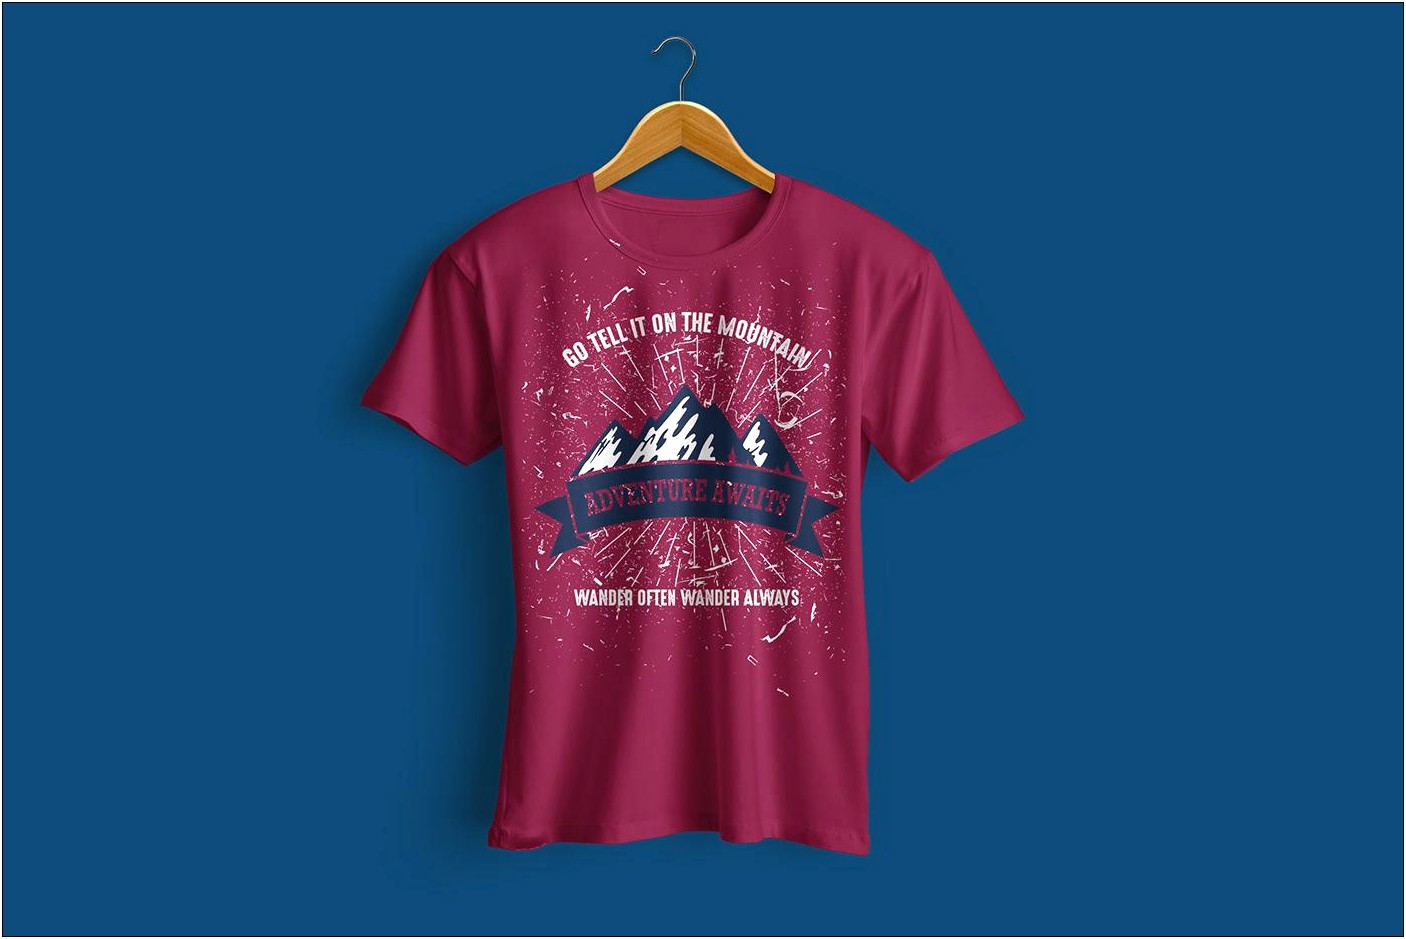 Free Printable T Shirt Design Template